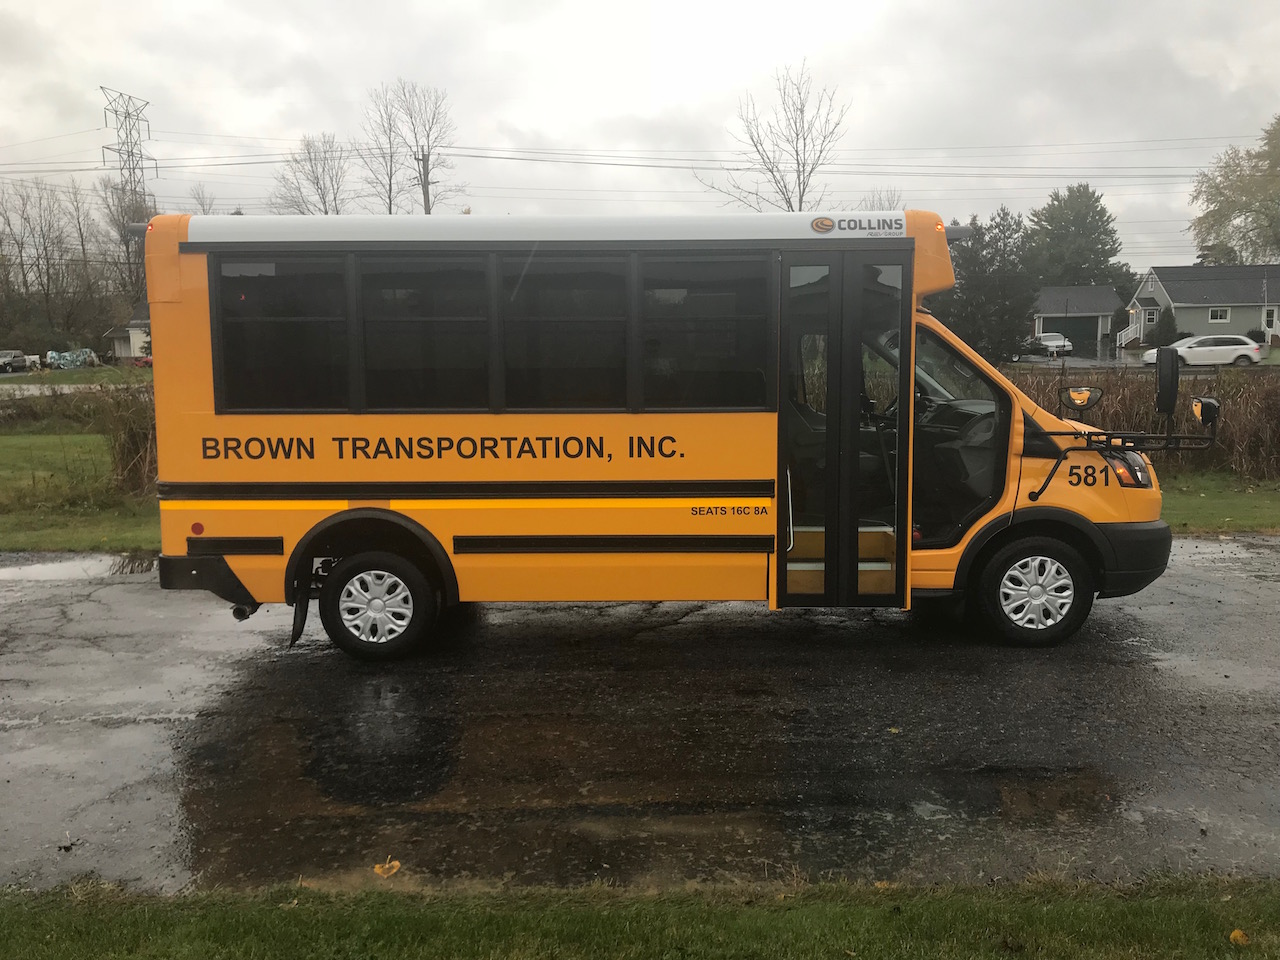 Collins School Buses to Brown Transportation - 5 units - Gorman Enterprises